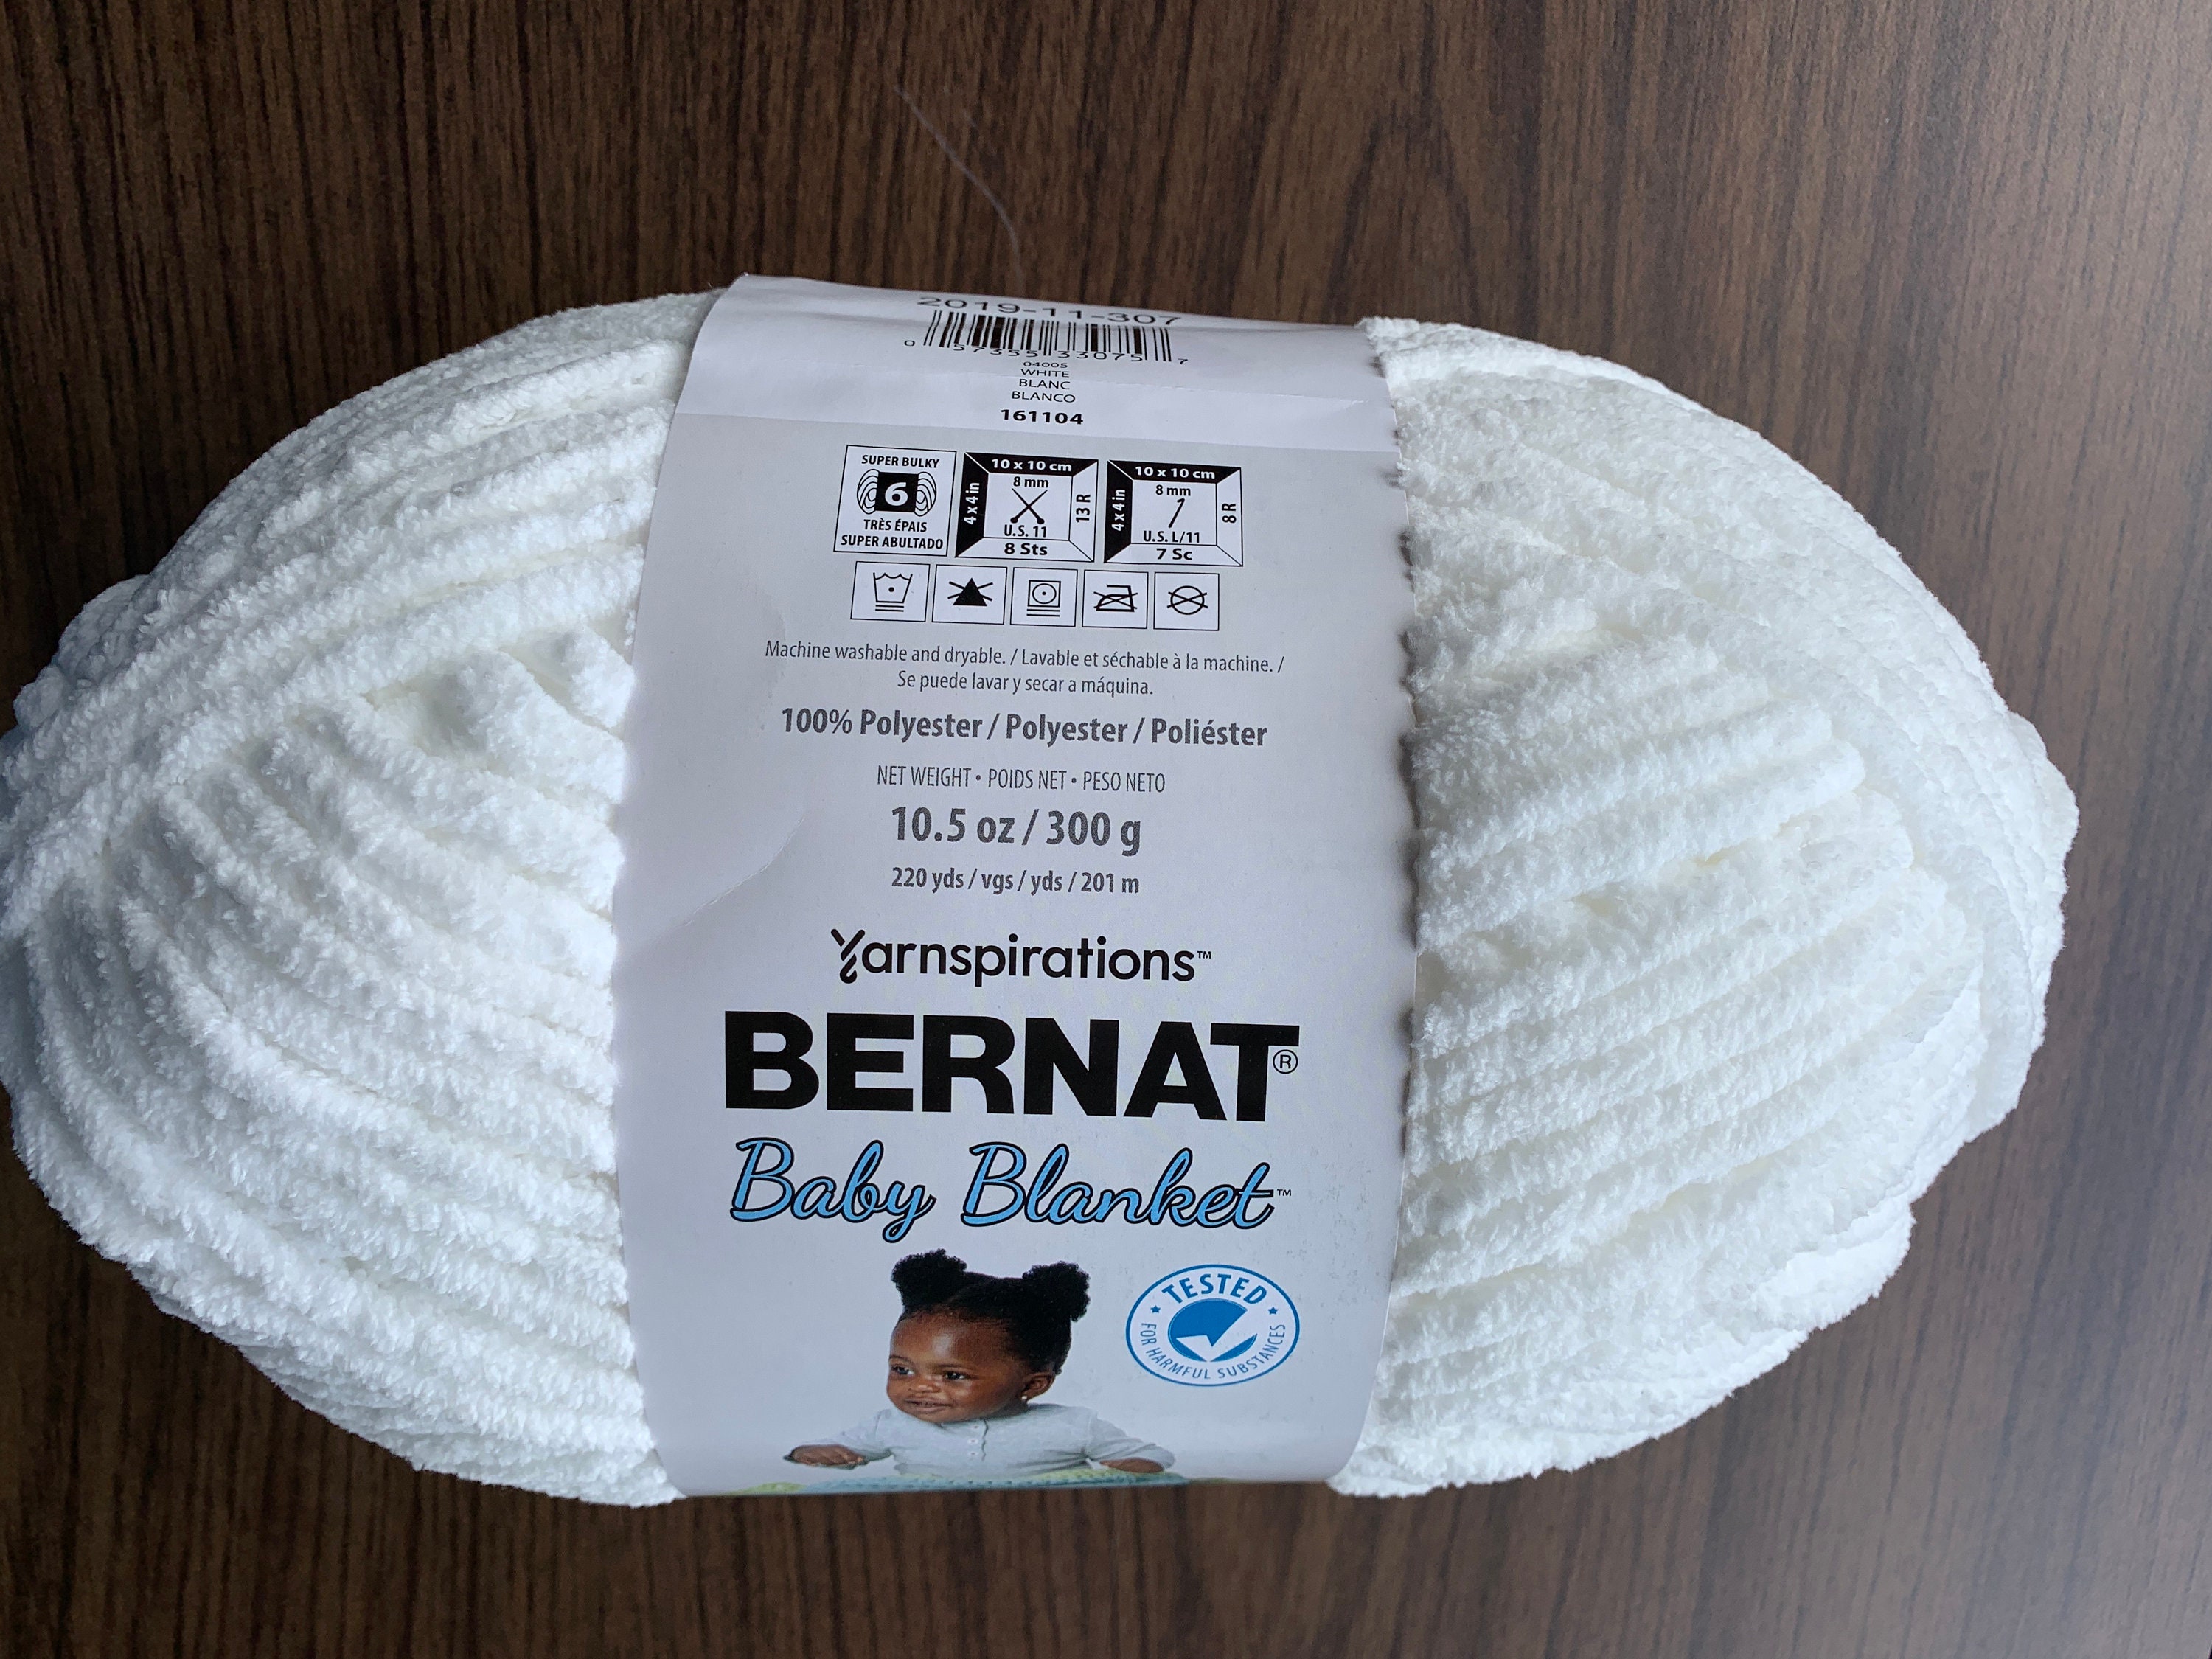 Bernat Blanket Extra Chunky Chenile Acrylic Yarn - 2 Pack of 300g/10.5oz #7 Jumbo Heavyweight Yarn for Knitting and Crocheting, Amigurumi, Thick